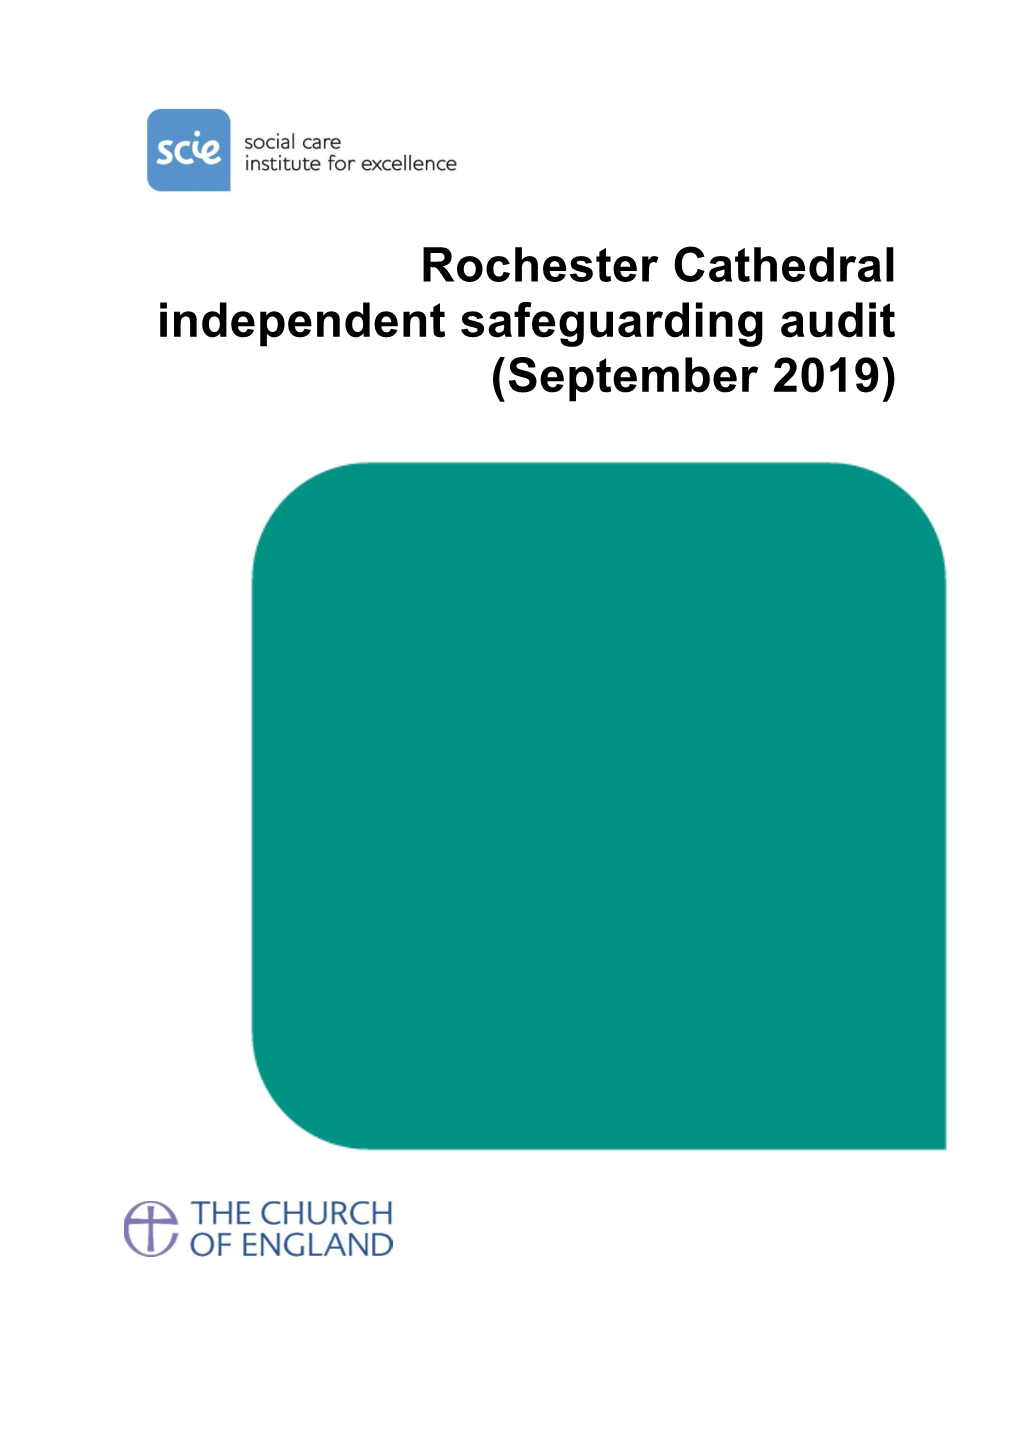 Rochester Cathedral Independent Safeguarding Audit (September 2019)